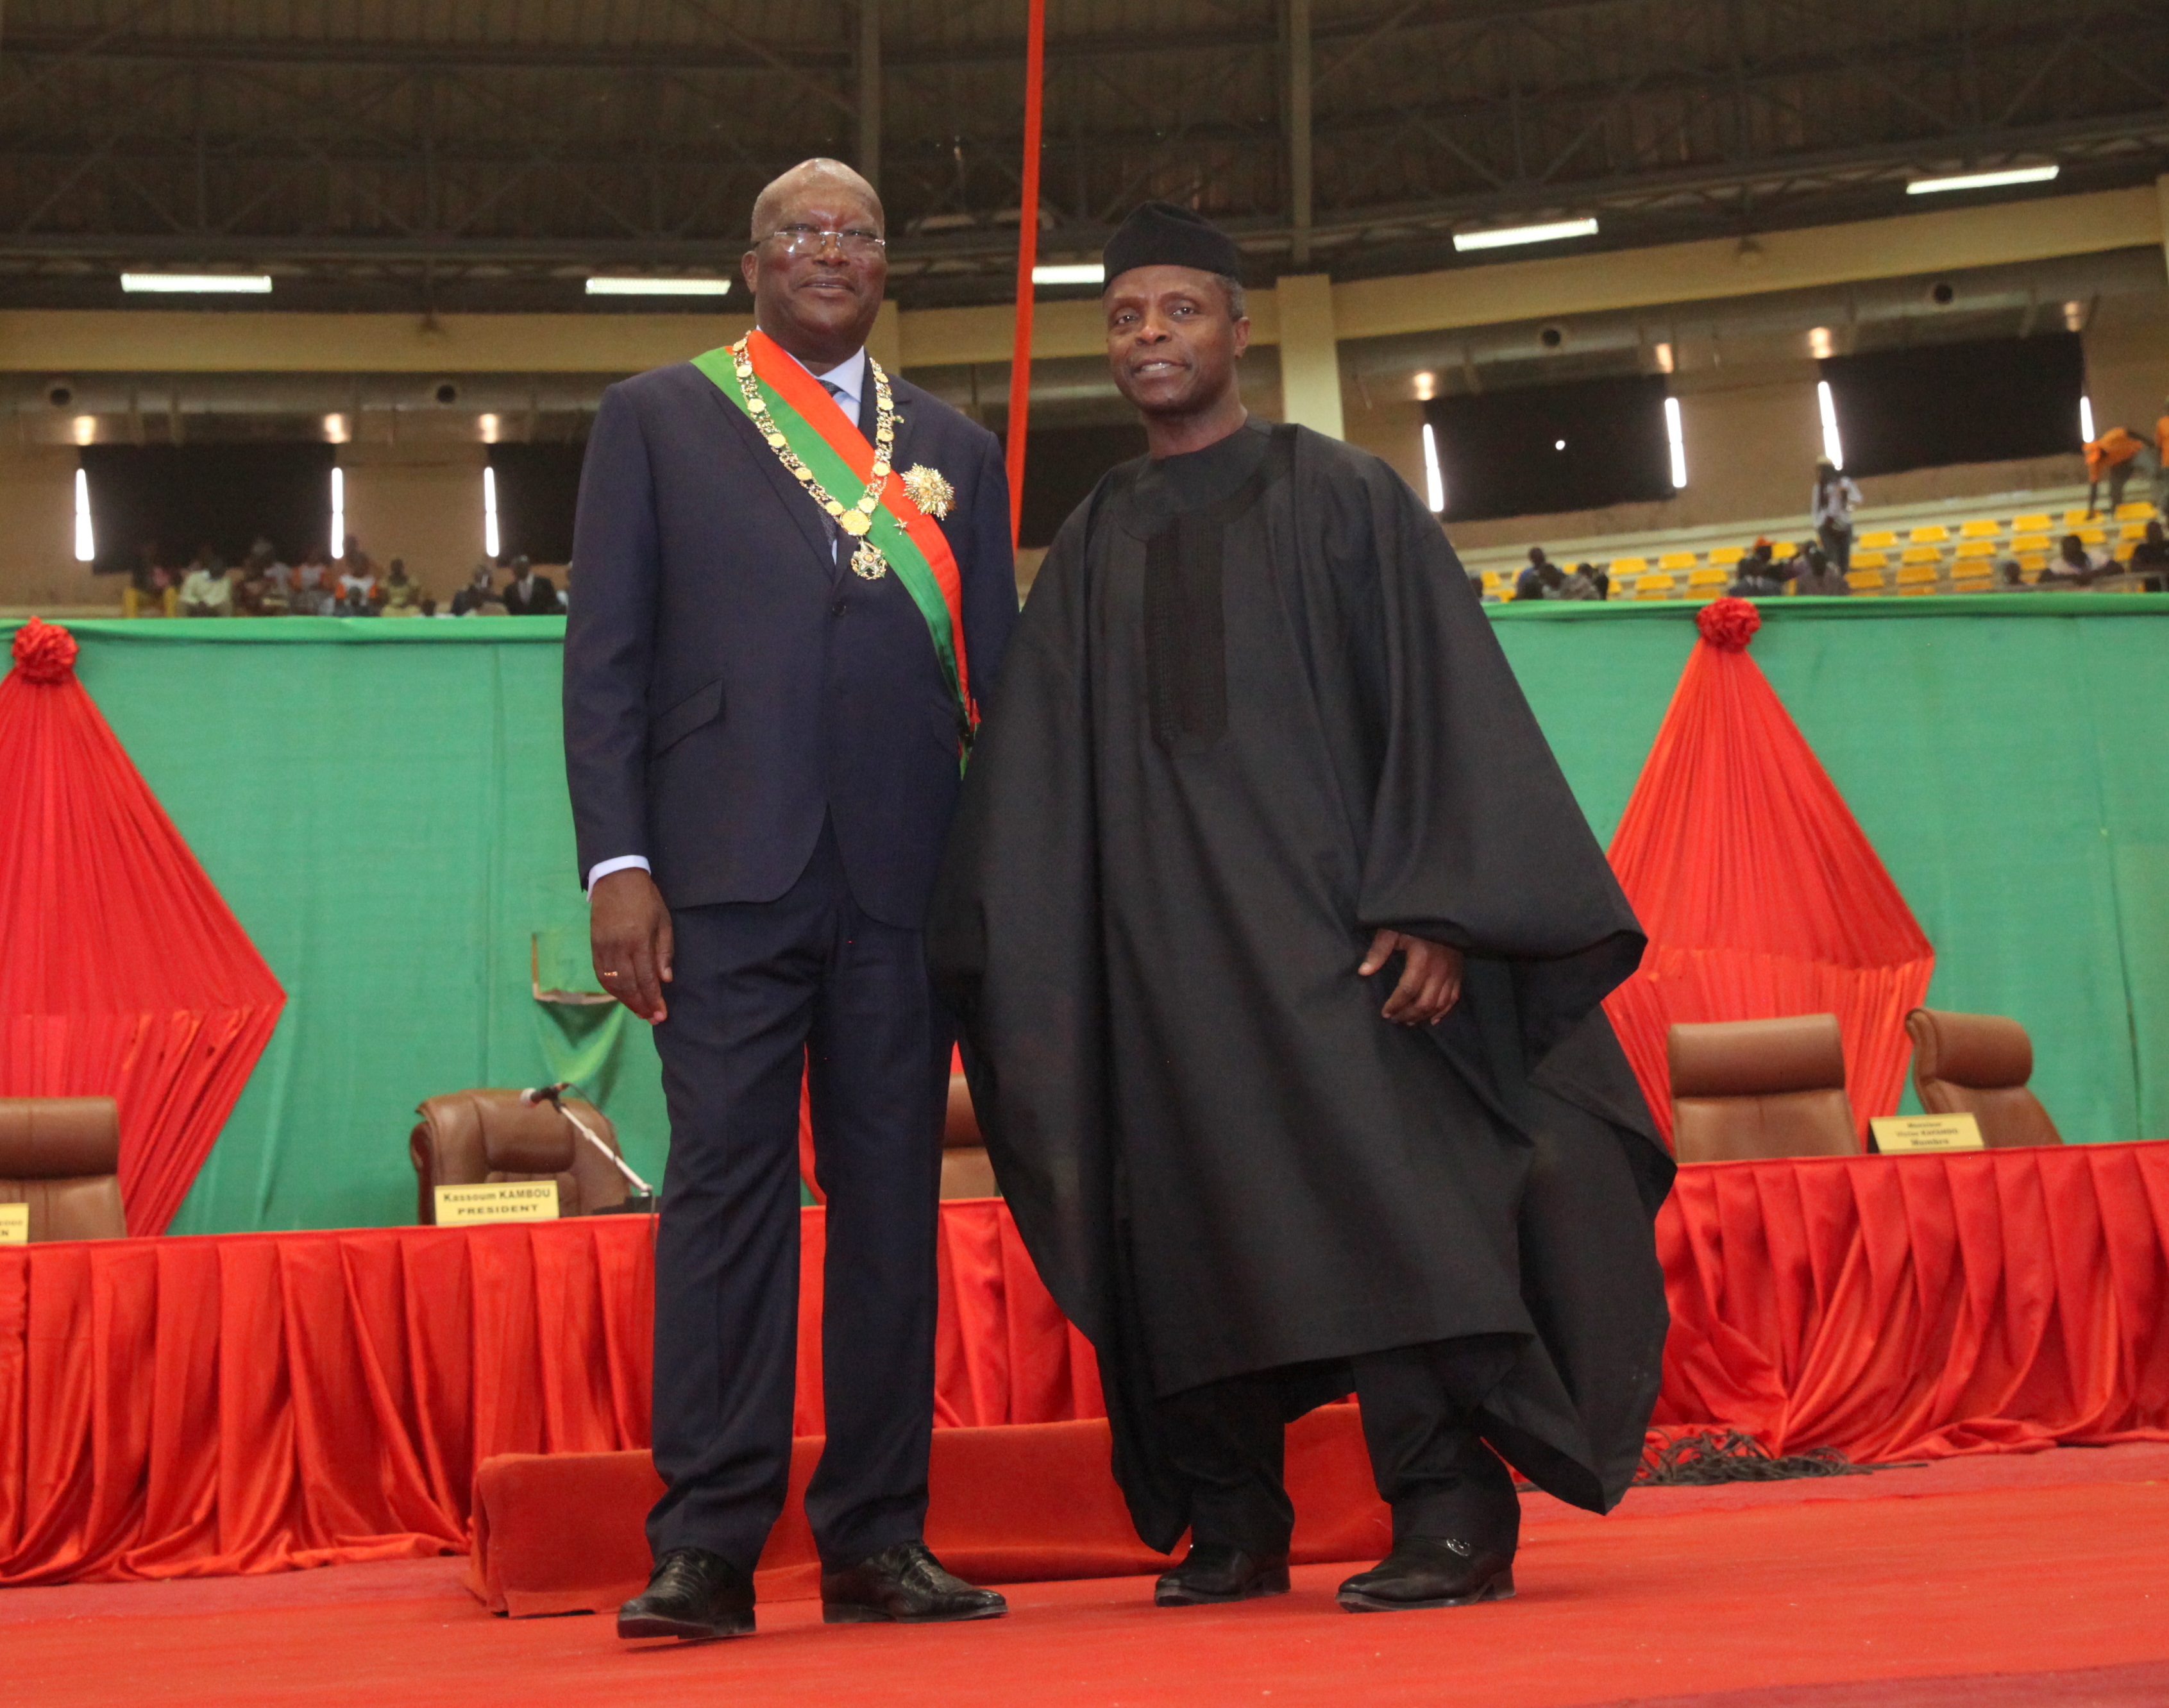 VP Osinbajo Attends The Inauguration Ceremony Of Burkina Faso’s President, Mr. Roch Marc Christian Kaboré On 29/12/2015